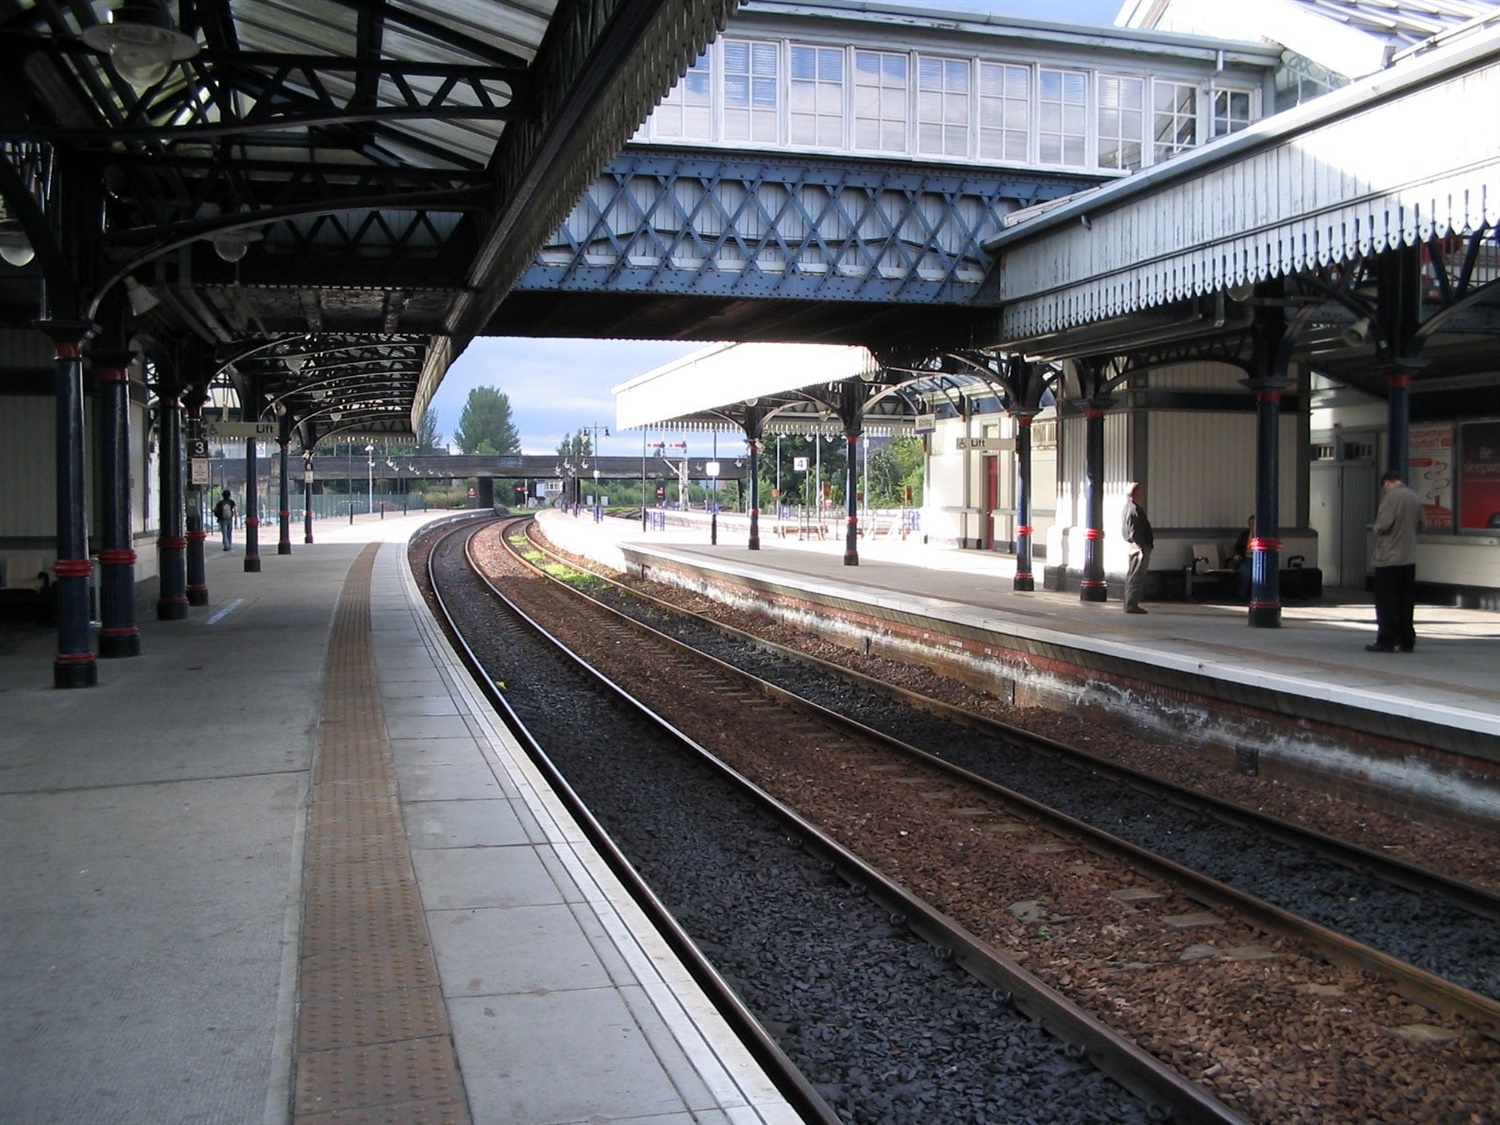 Stirling station upgrades set to start next week